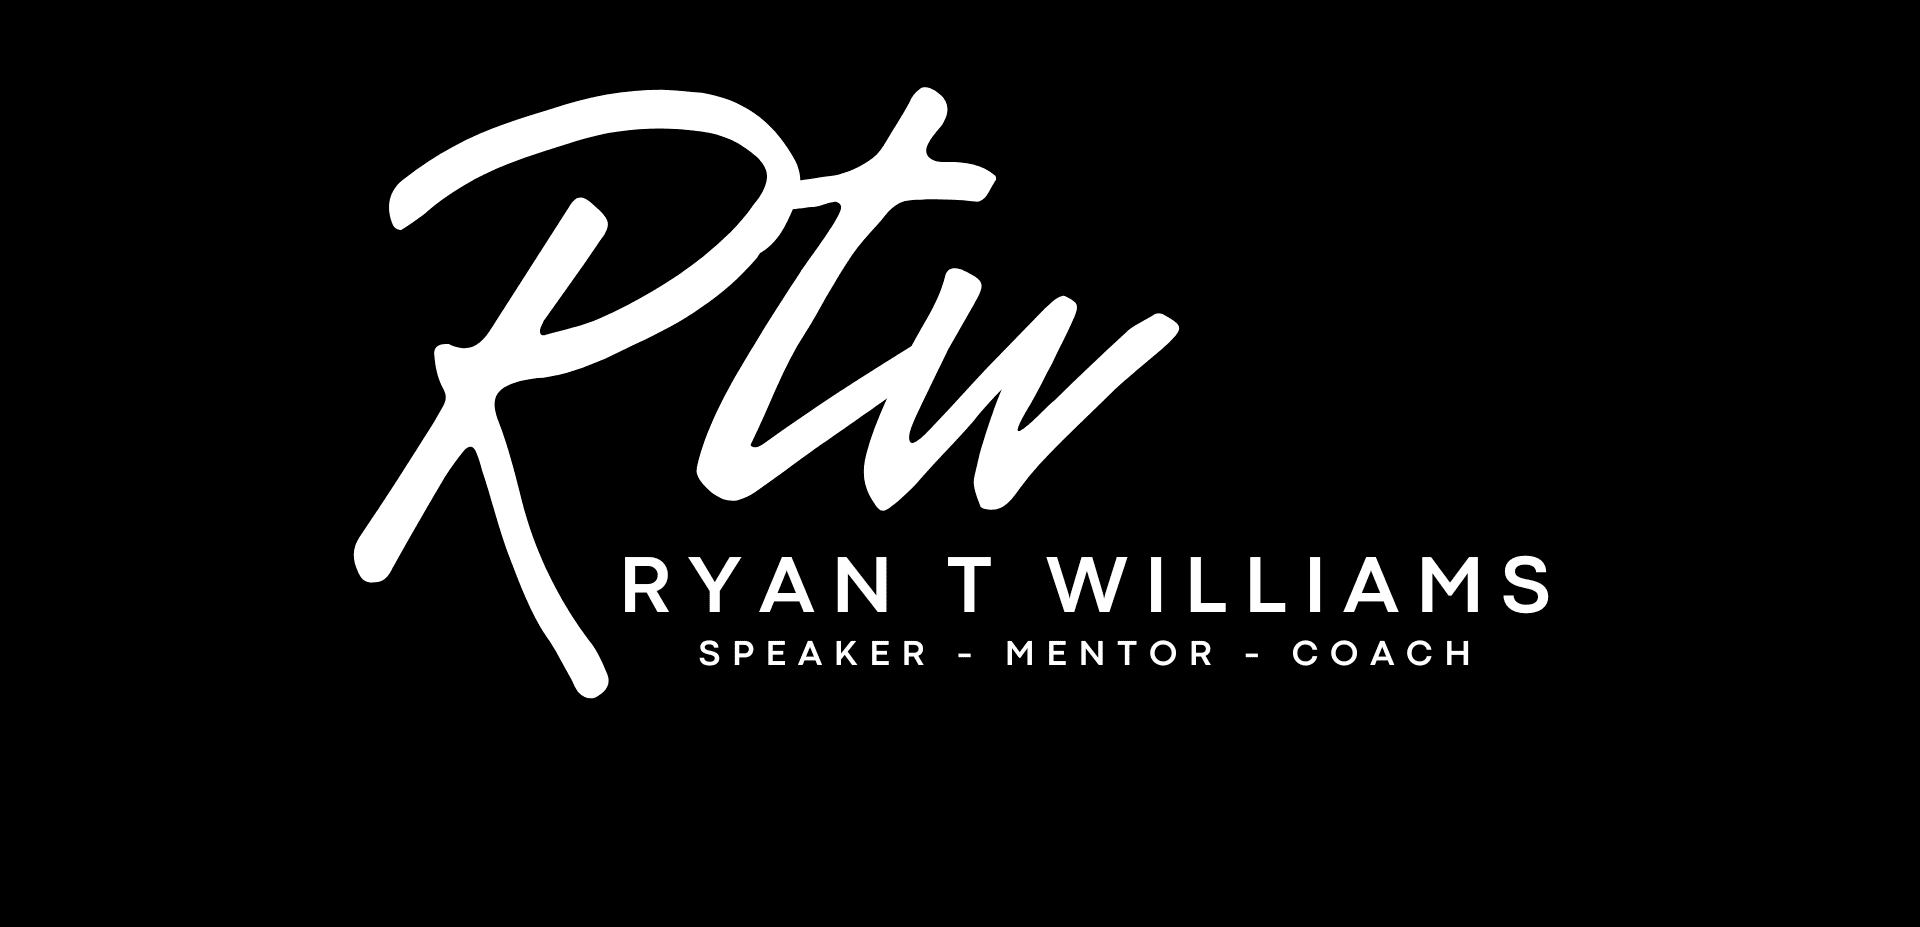 Ryan T Williams